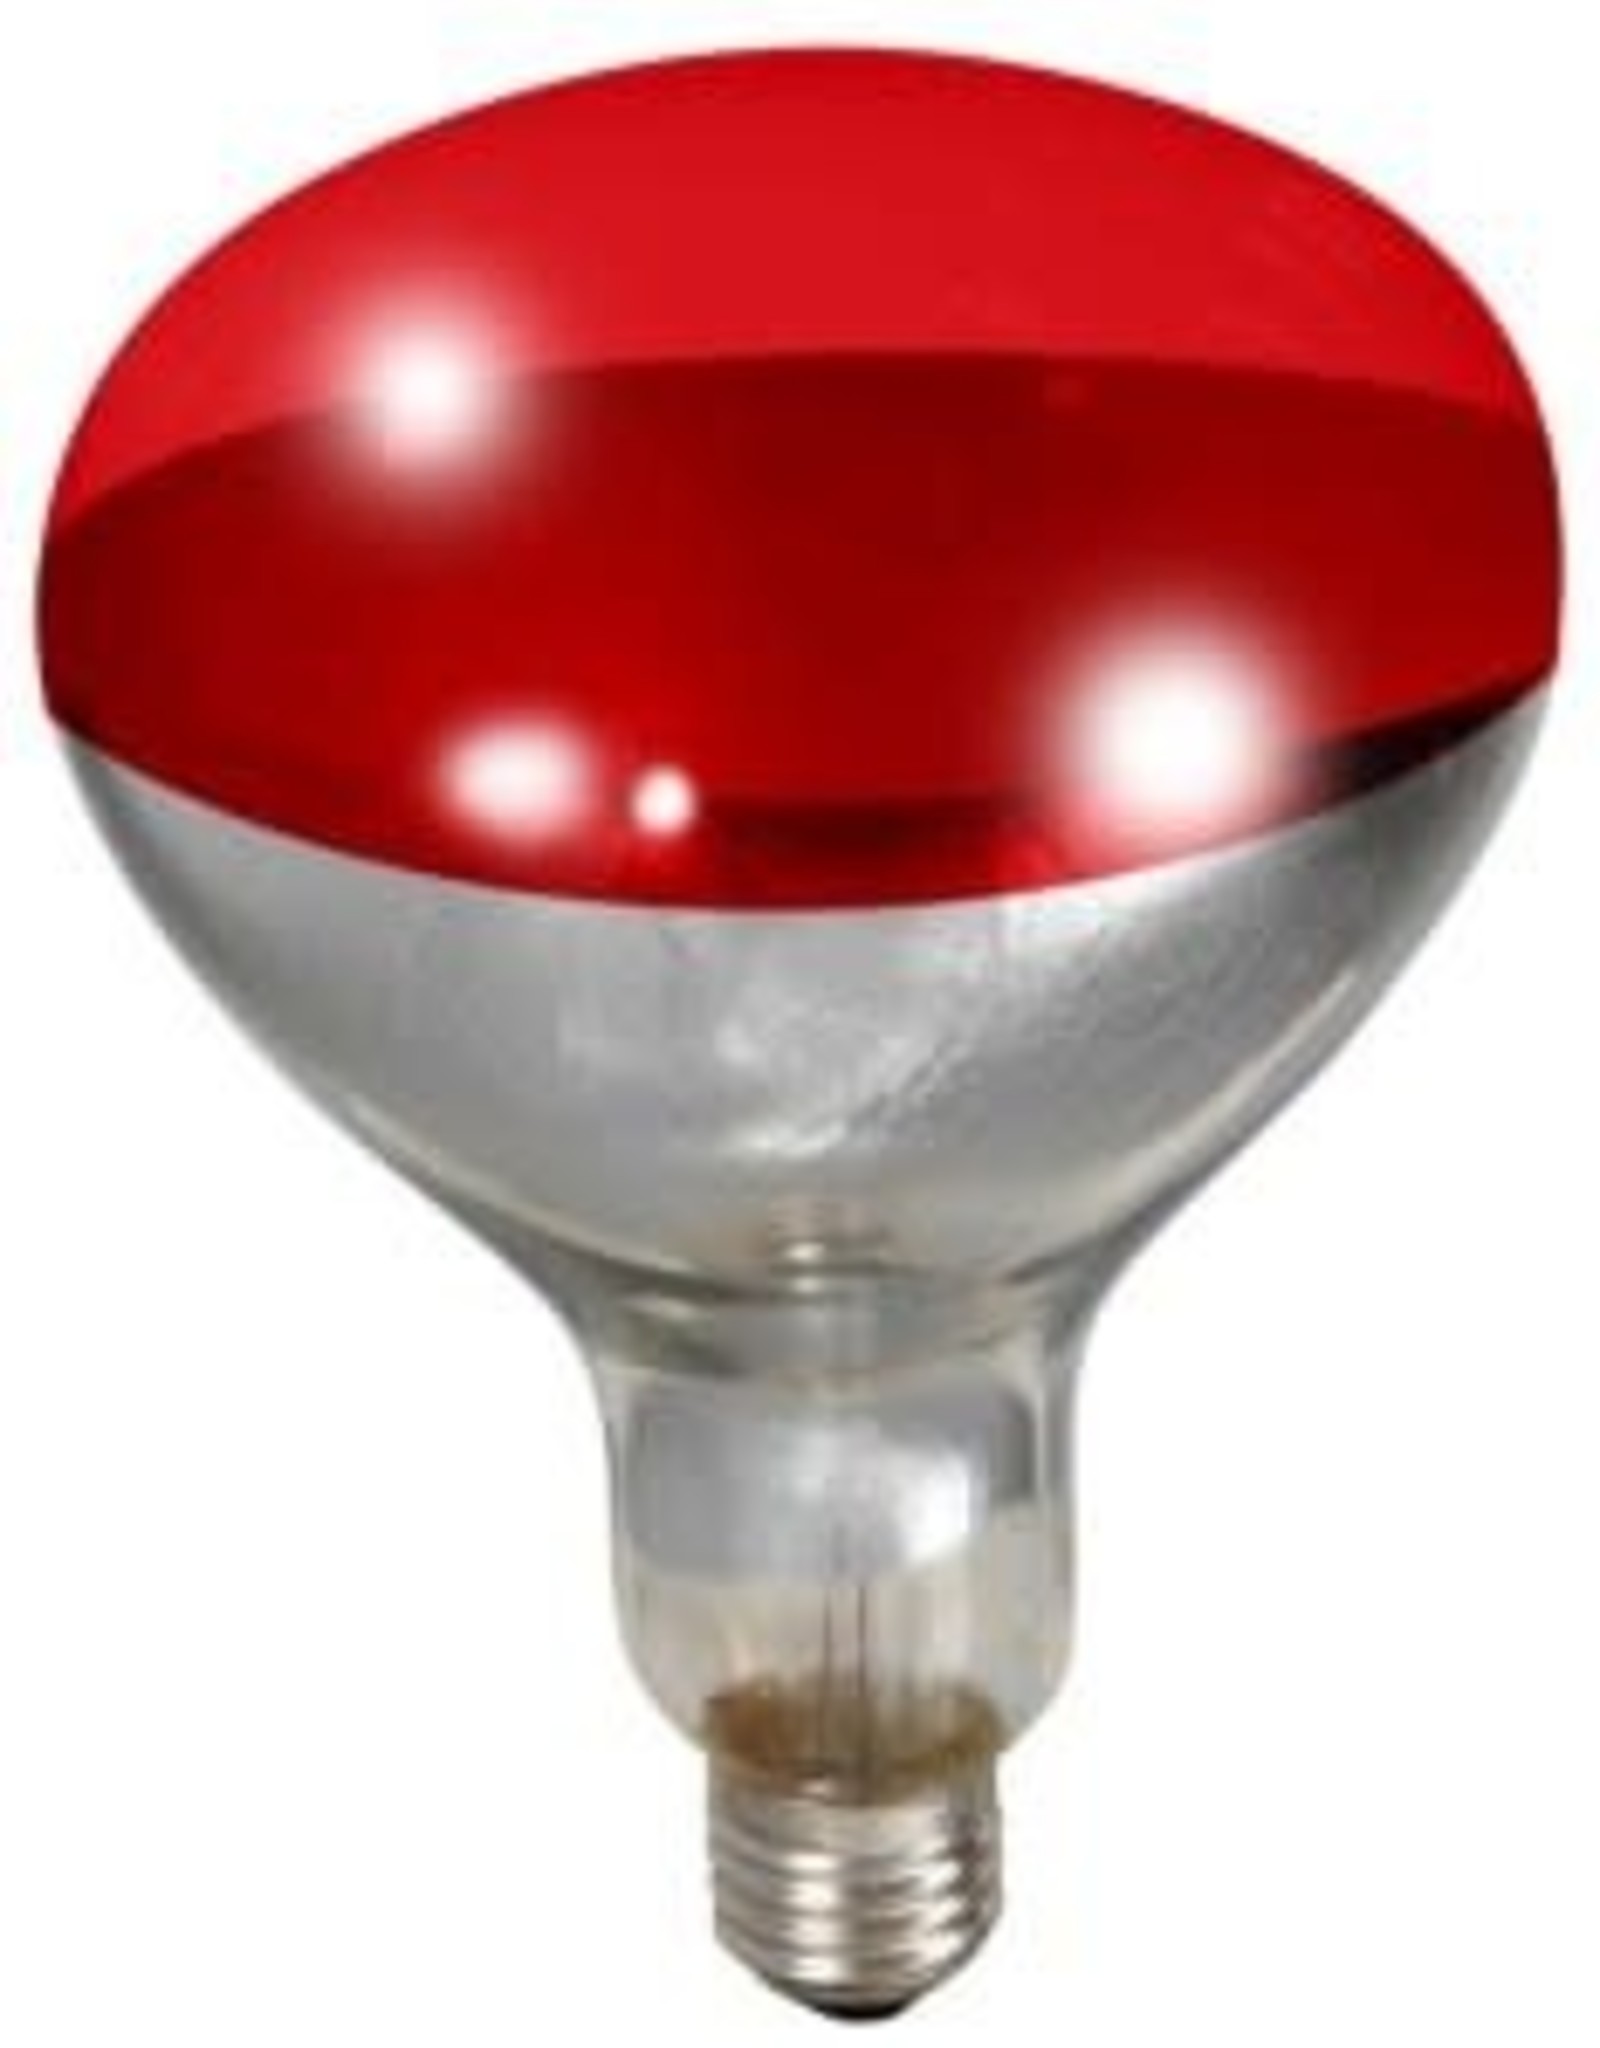 MILLER MFG CO INC Heat Lamp Red 250W